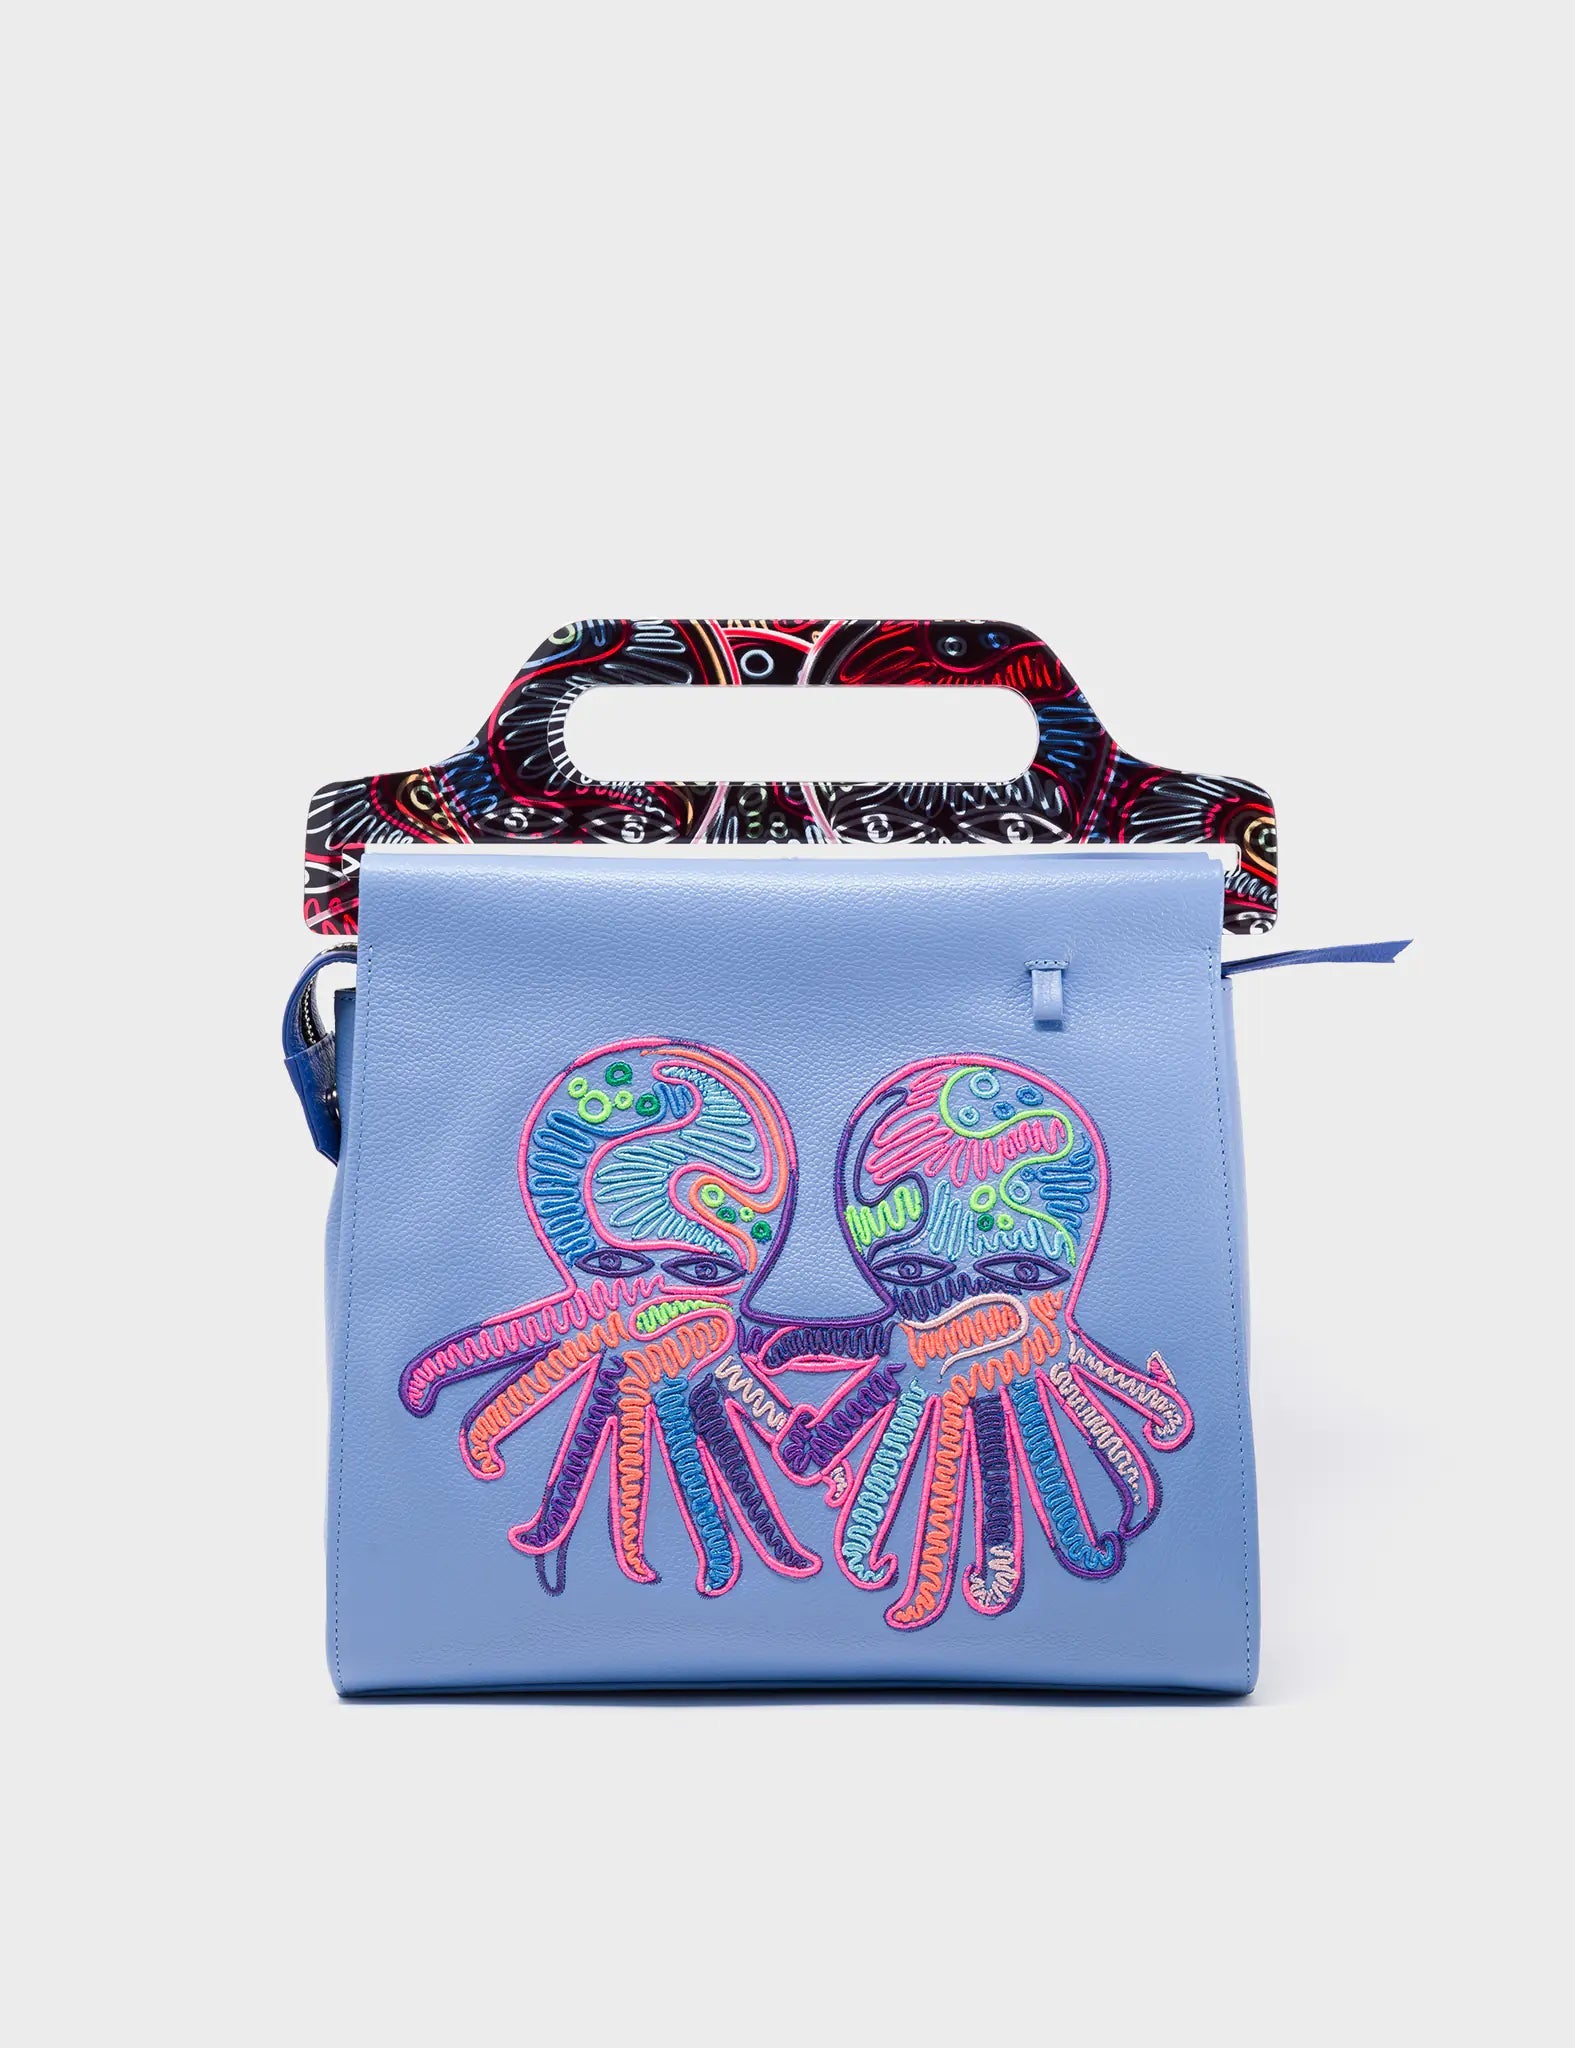 Crossbody Blue Leather Handbag Multicolored Octopus Design - Front 